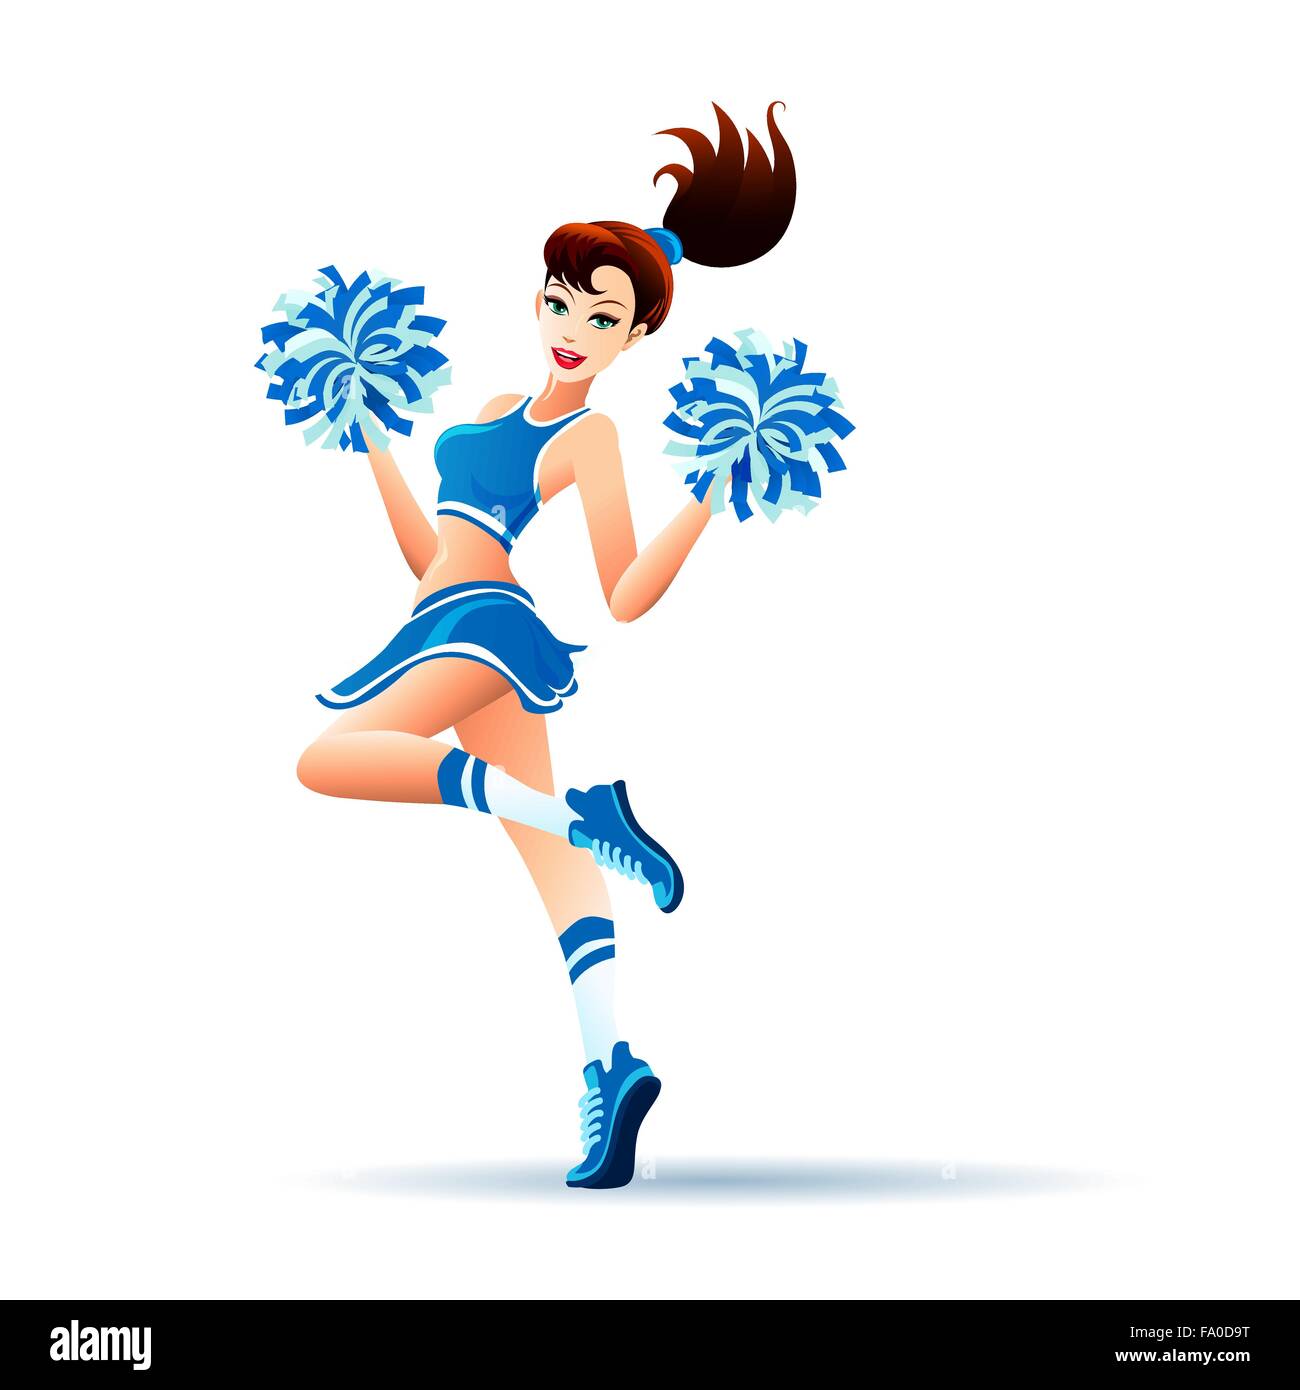 Illustration D'une Jolie Pom-pom Girl Adolescente Dansant Avec Des